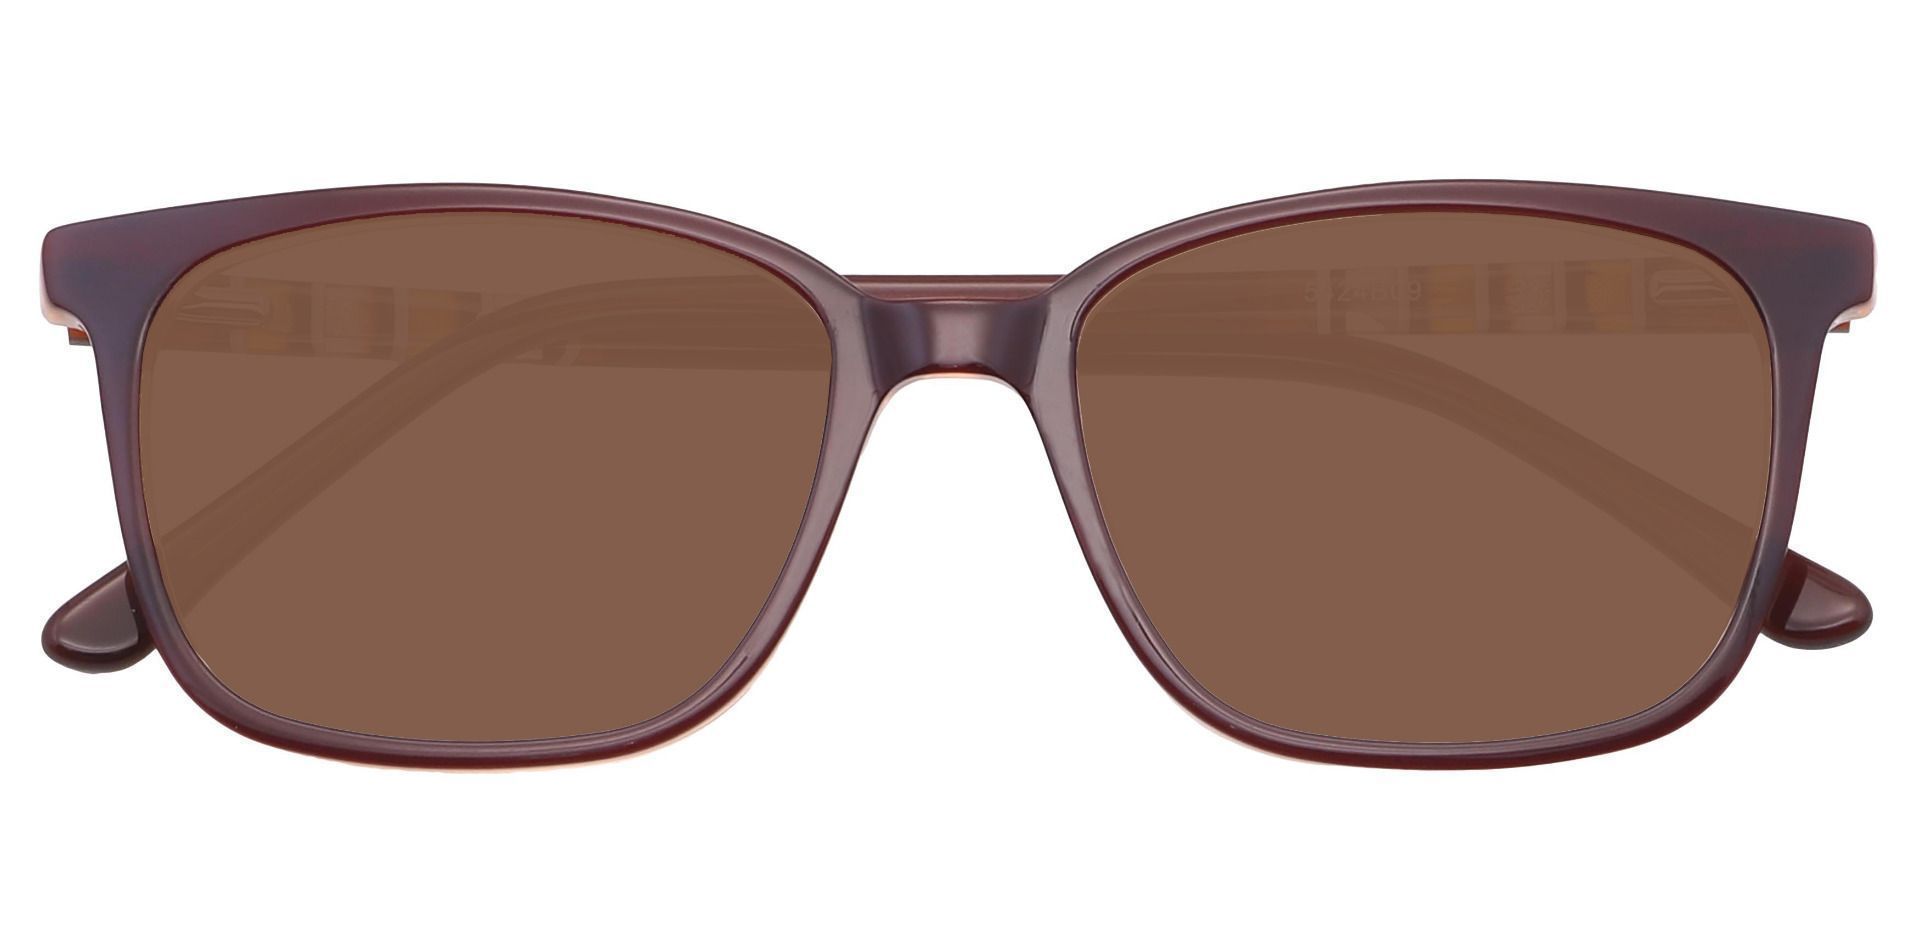 Fern Square Progressive Sunglasses - Brown Frame With Brown Lenses